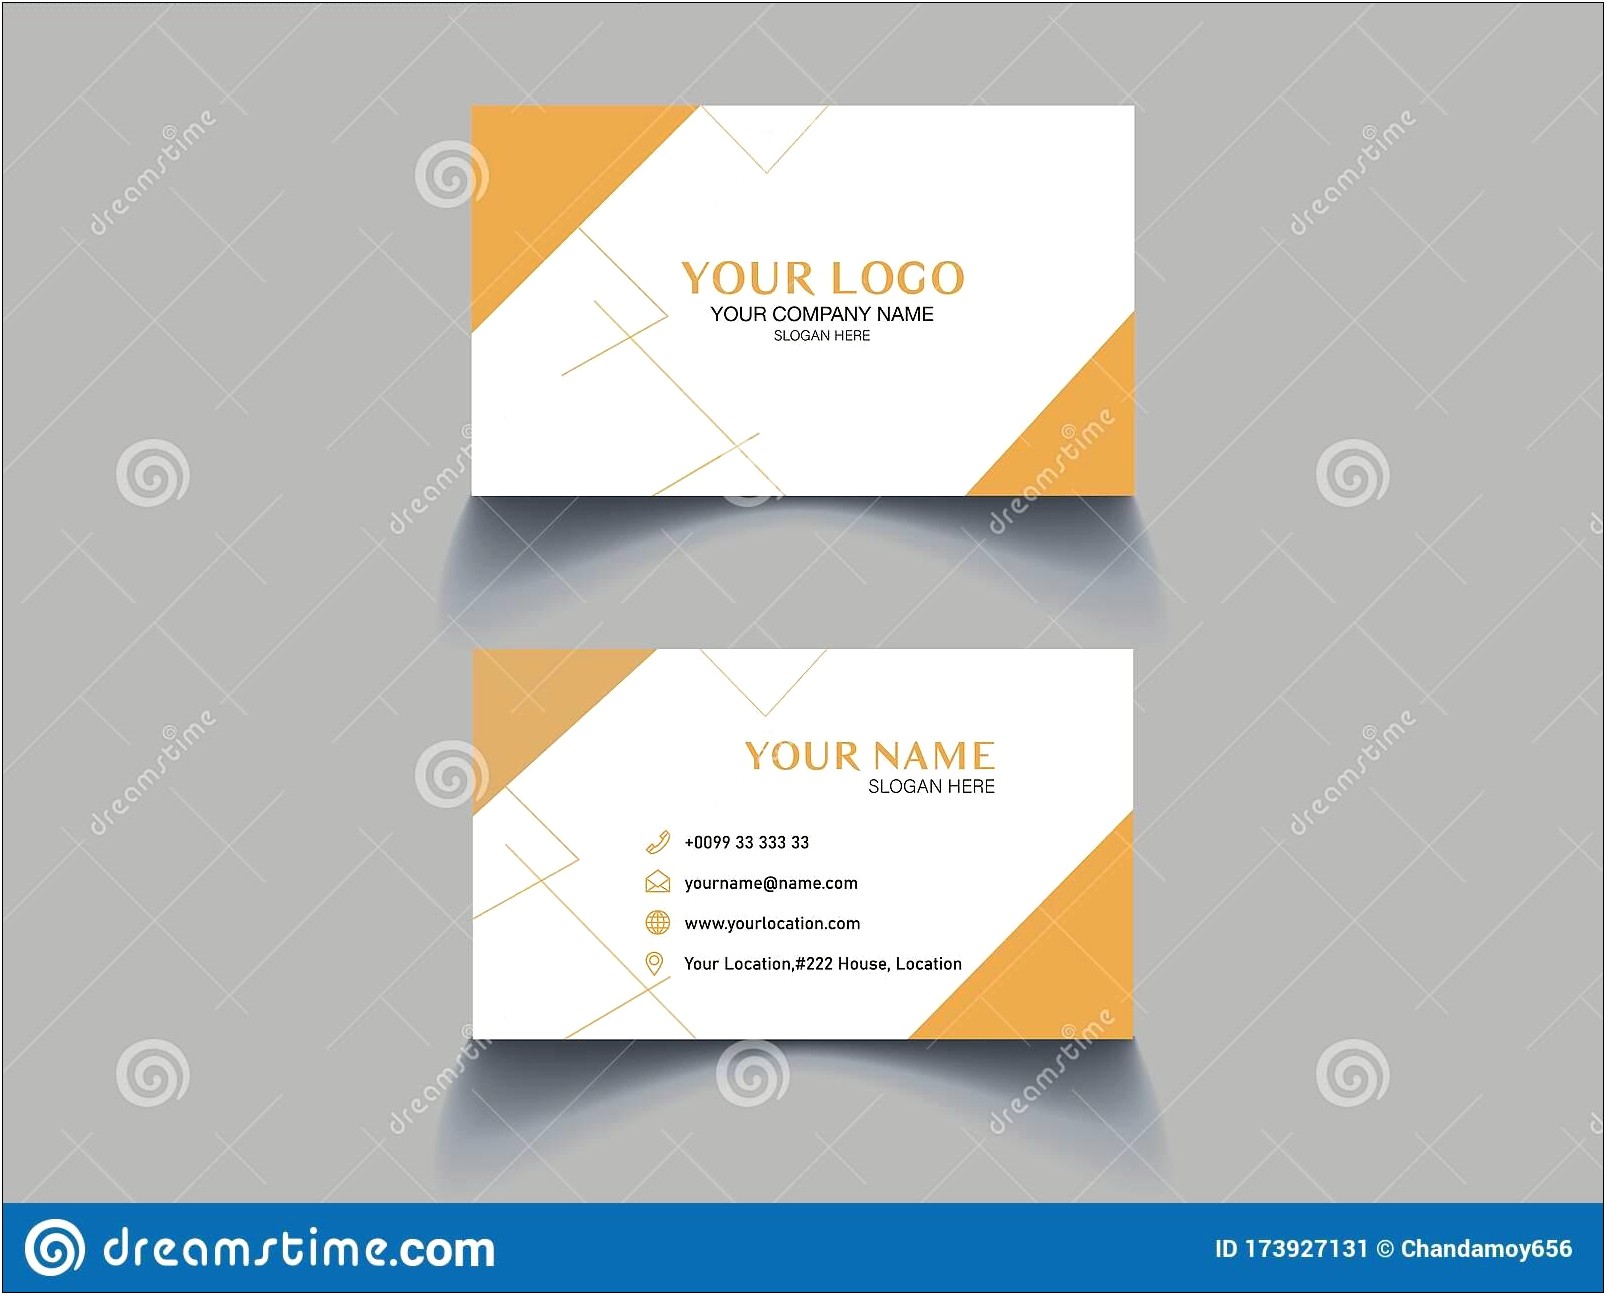 Business Card Template Adobe Illustrator Free